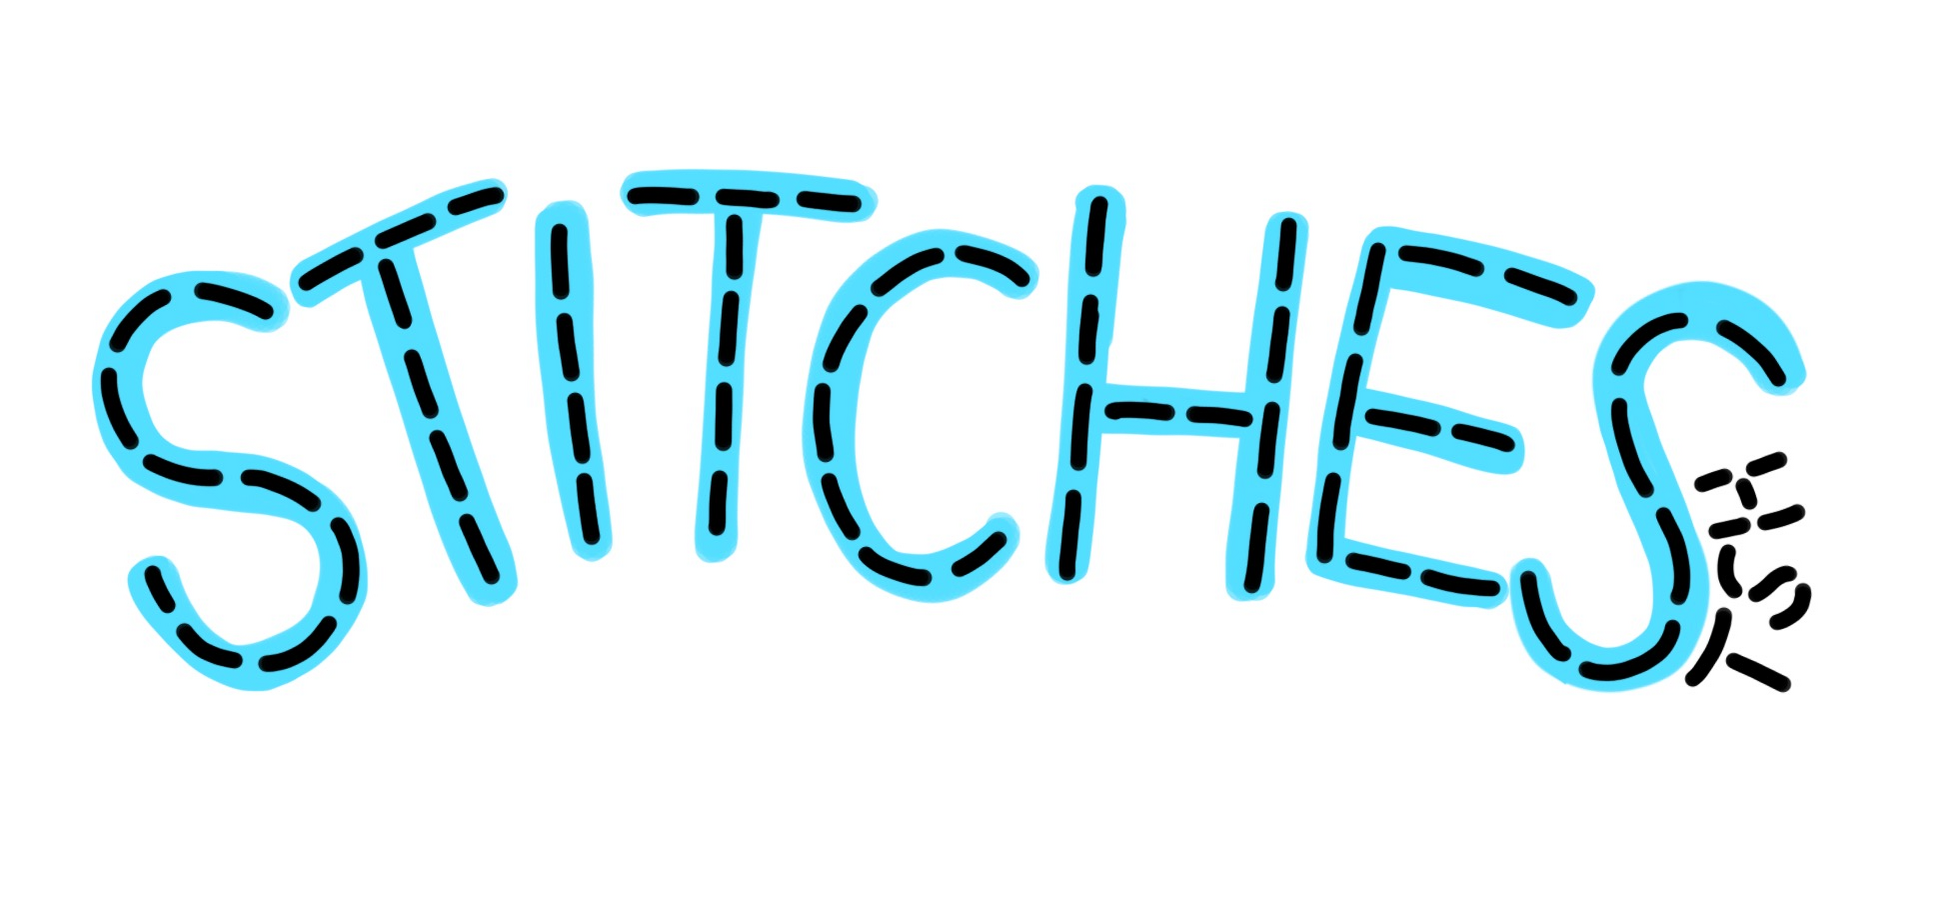 Stitches Patches - TinySuperheroes